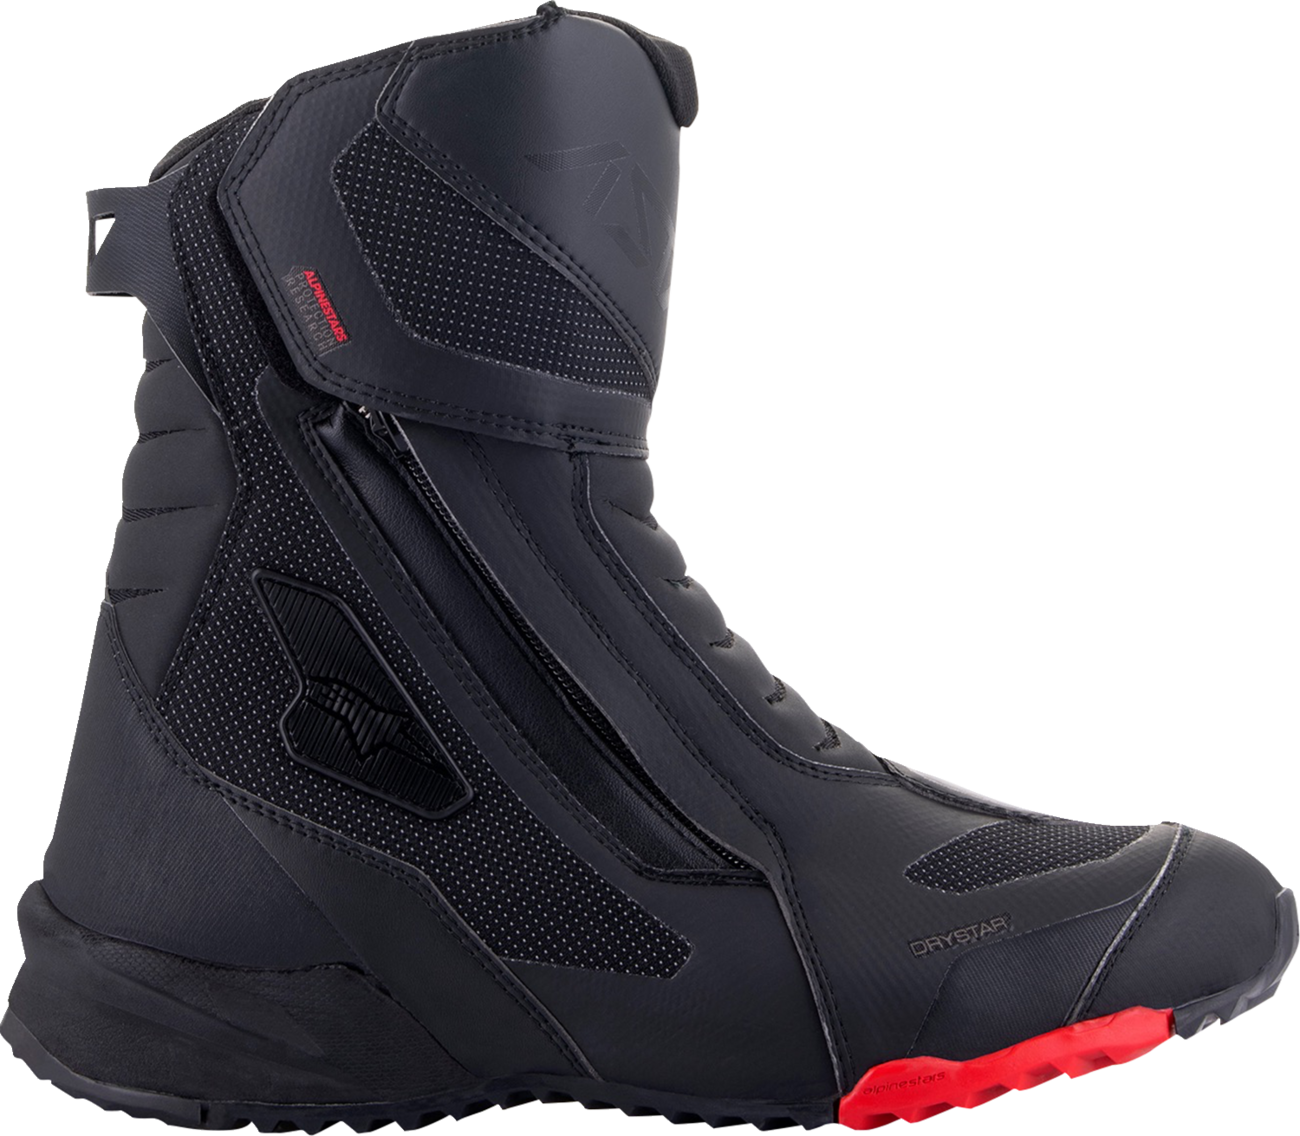 ALPINESTARS RT-7 Drystar® Boots - Black/Red - US 12.5 / EU 46 2443023-13-46